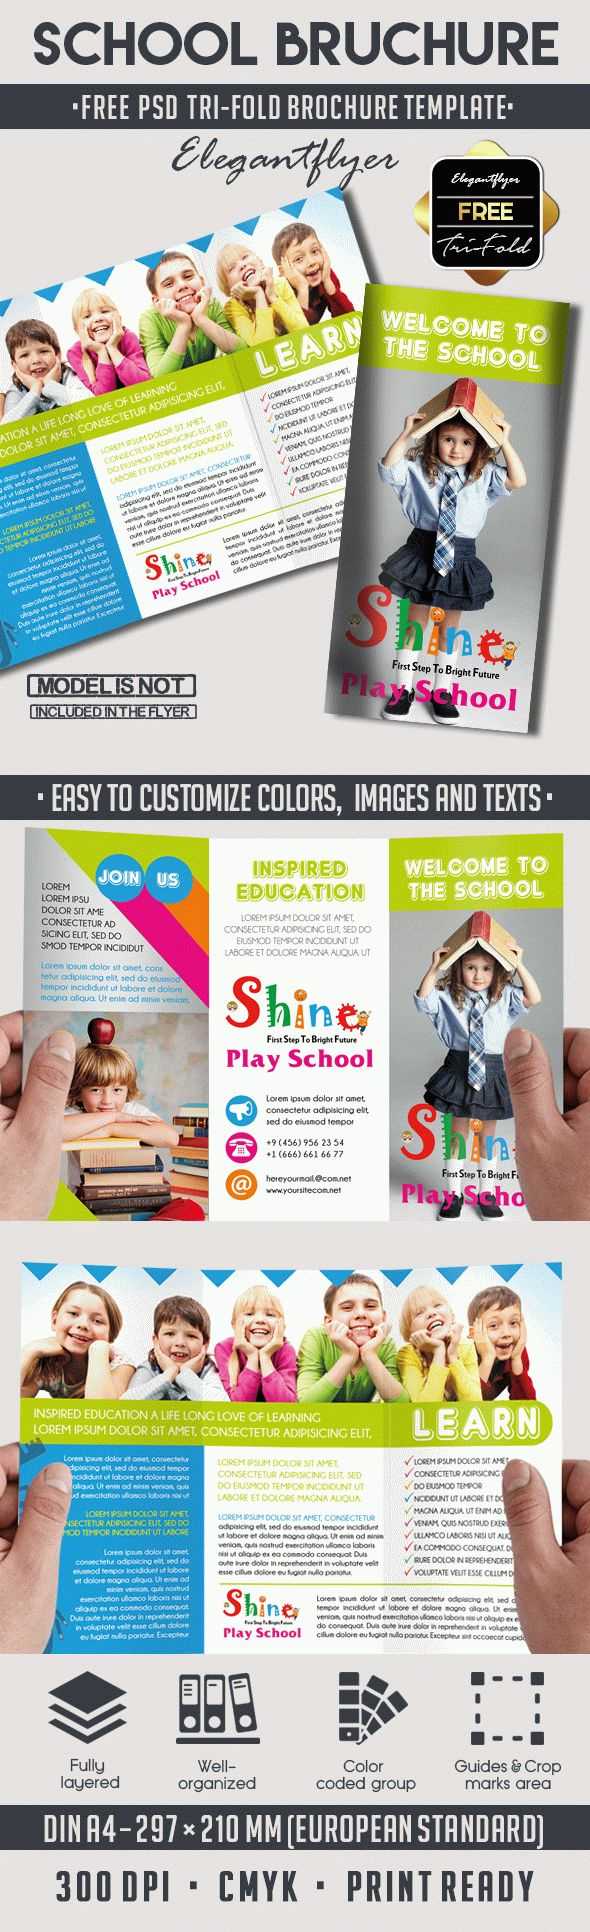 School – Free Psd Tri Fold Psd Brochure Template Inside Play School Brochure Templates